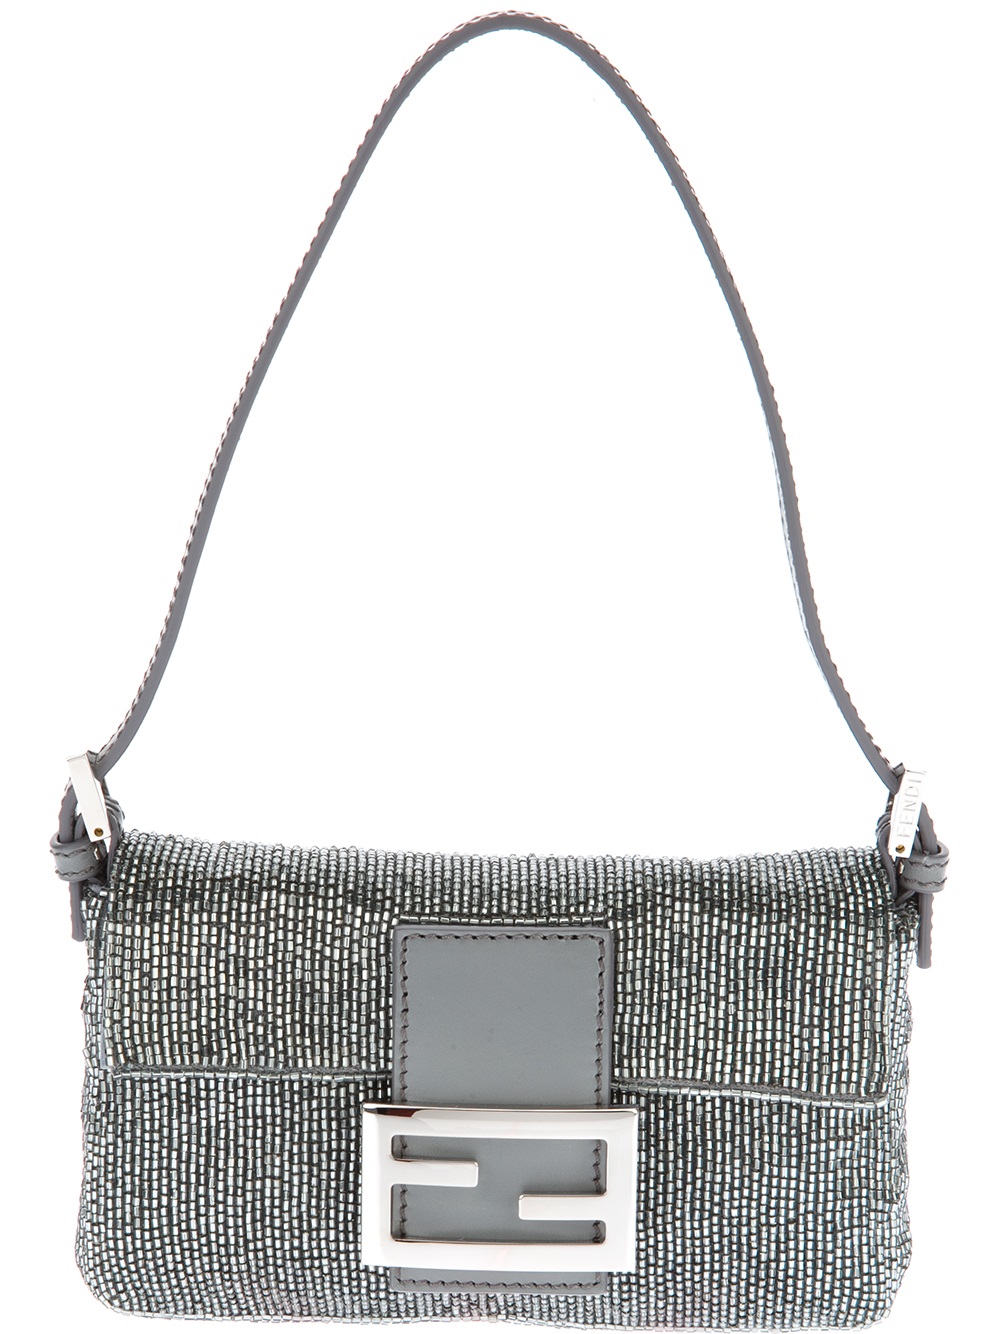 Lyst - Fendi Palladio Baguette Shoulder Bag in Gray